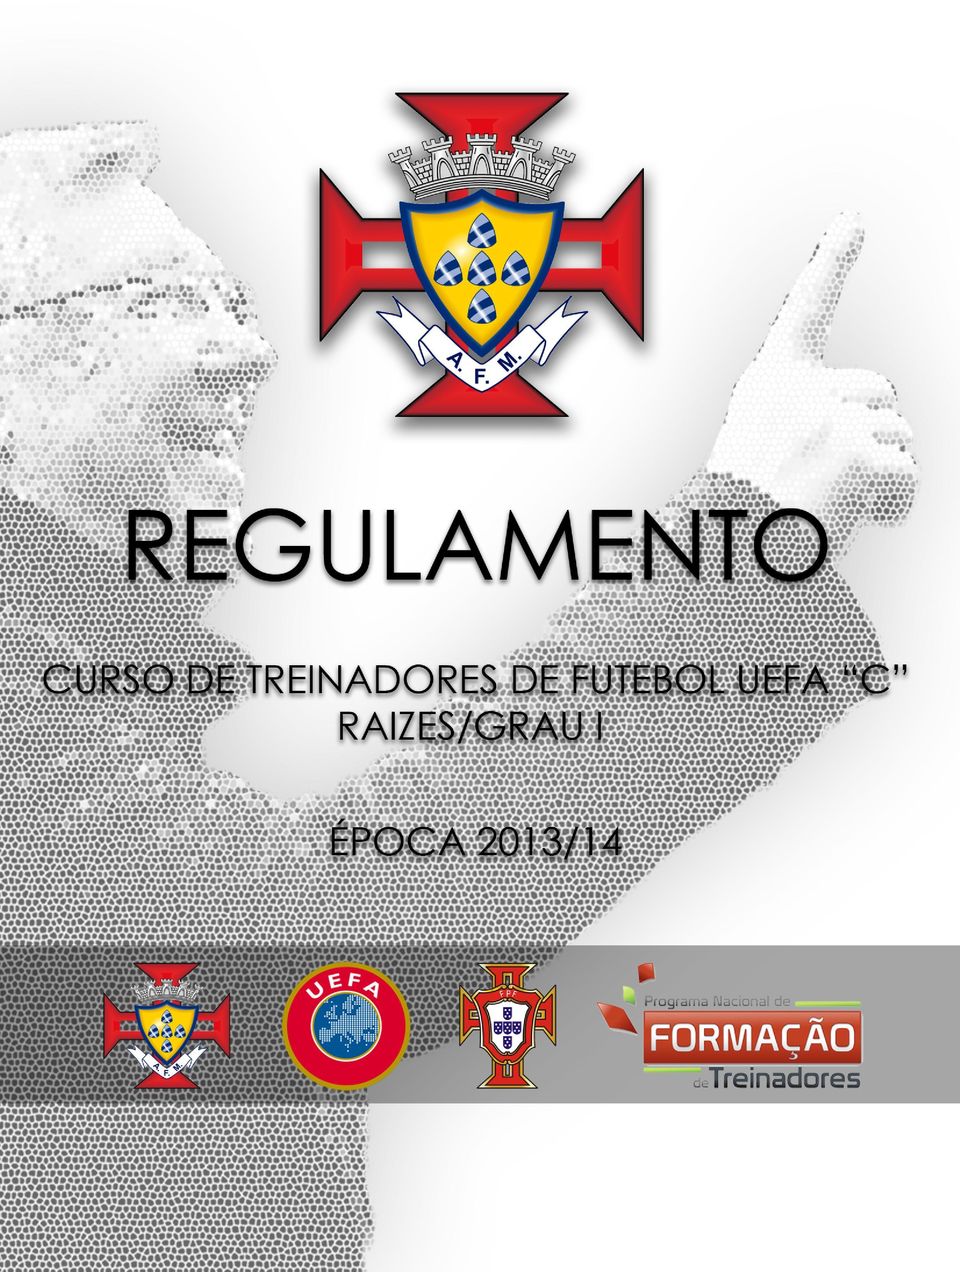 Caderno Curso UEFA C - raízes - I Grau Futsal